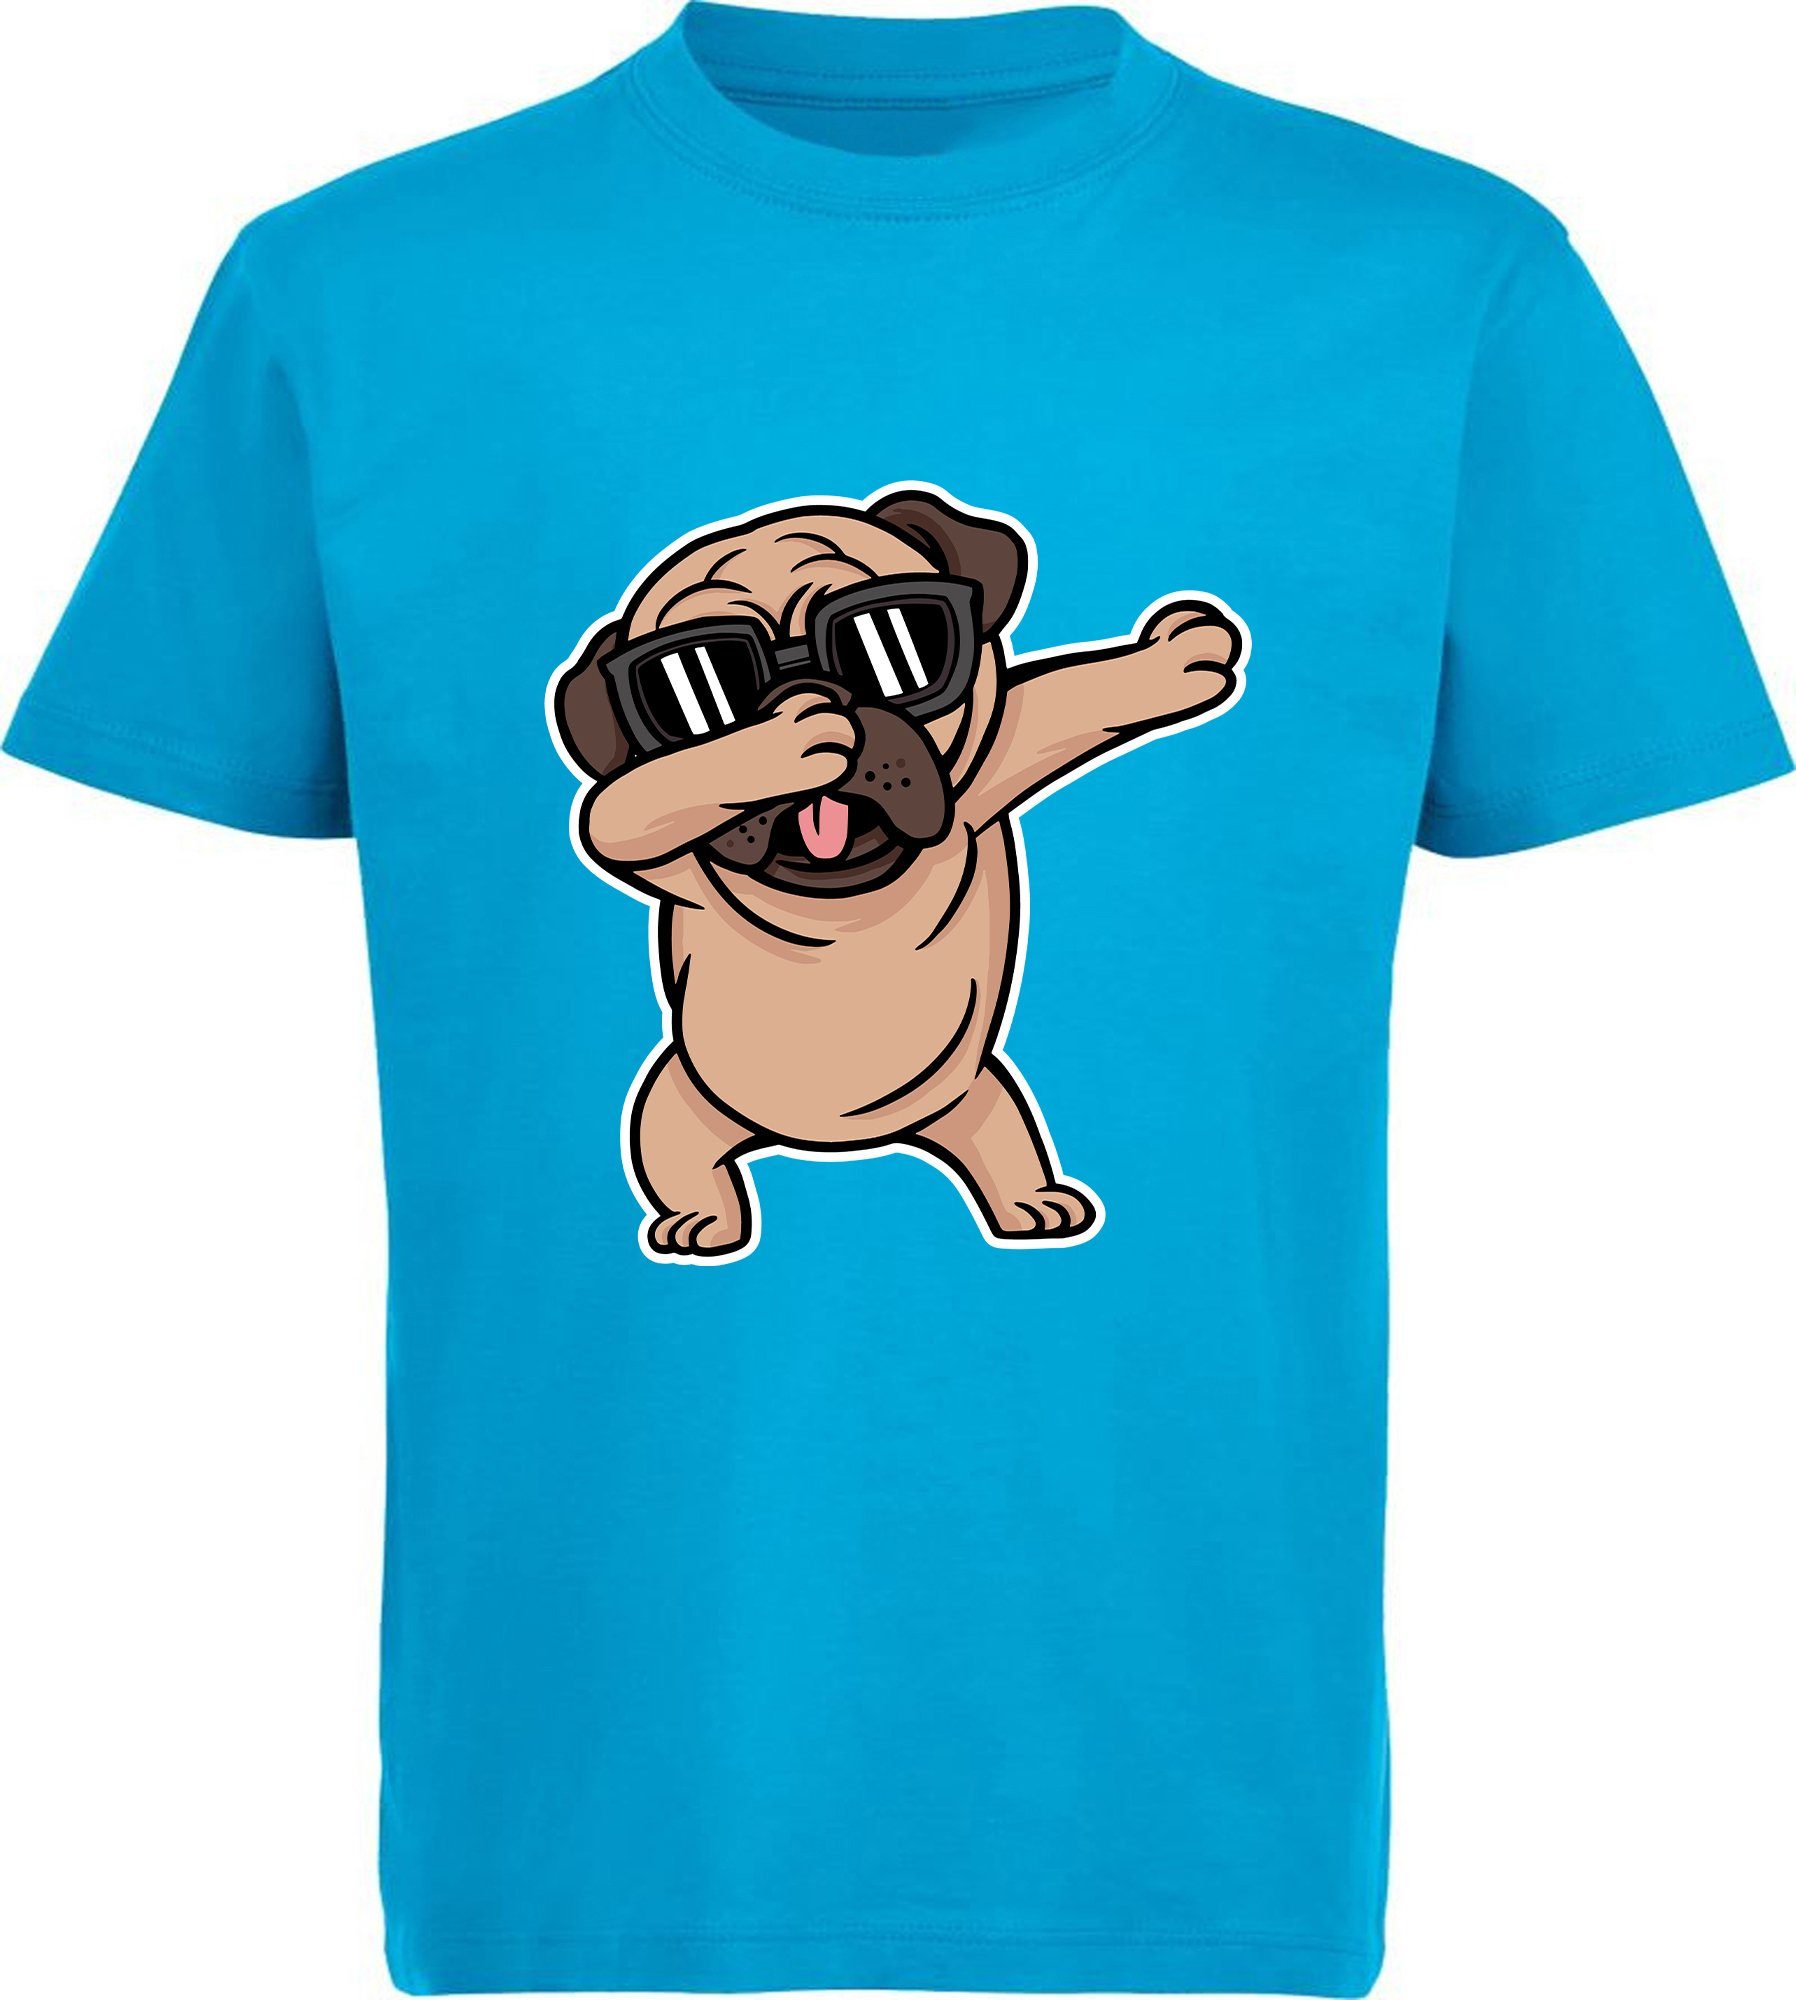 MyDesign24 Print-Shirt Kinder Hunde T-Shirt bedruckt - Cooler Hund mit Skateboard Baumwollshirt mit Aufdruck, i239 aqua blau